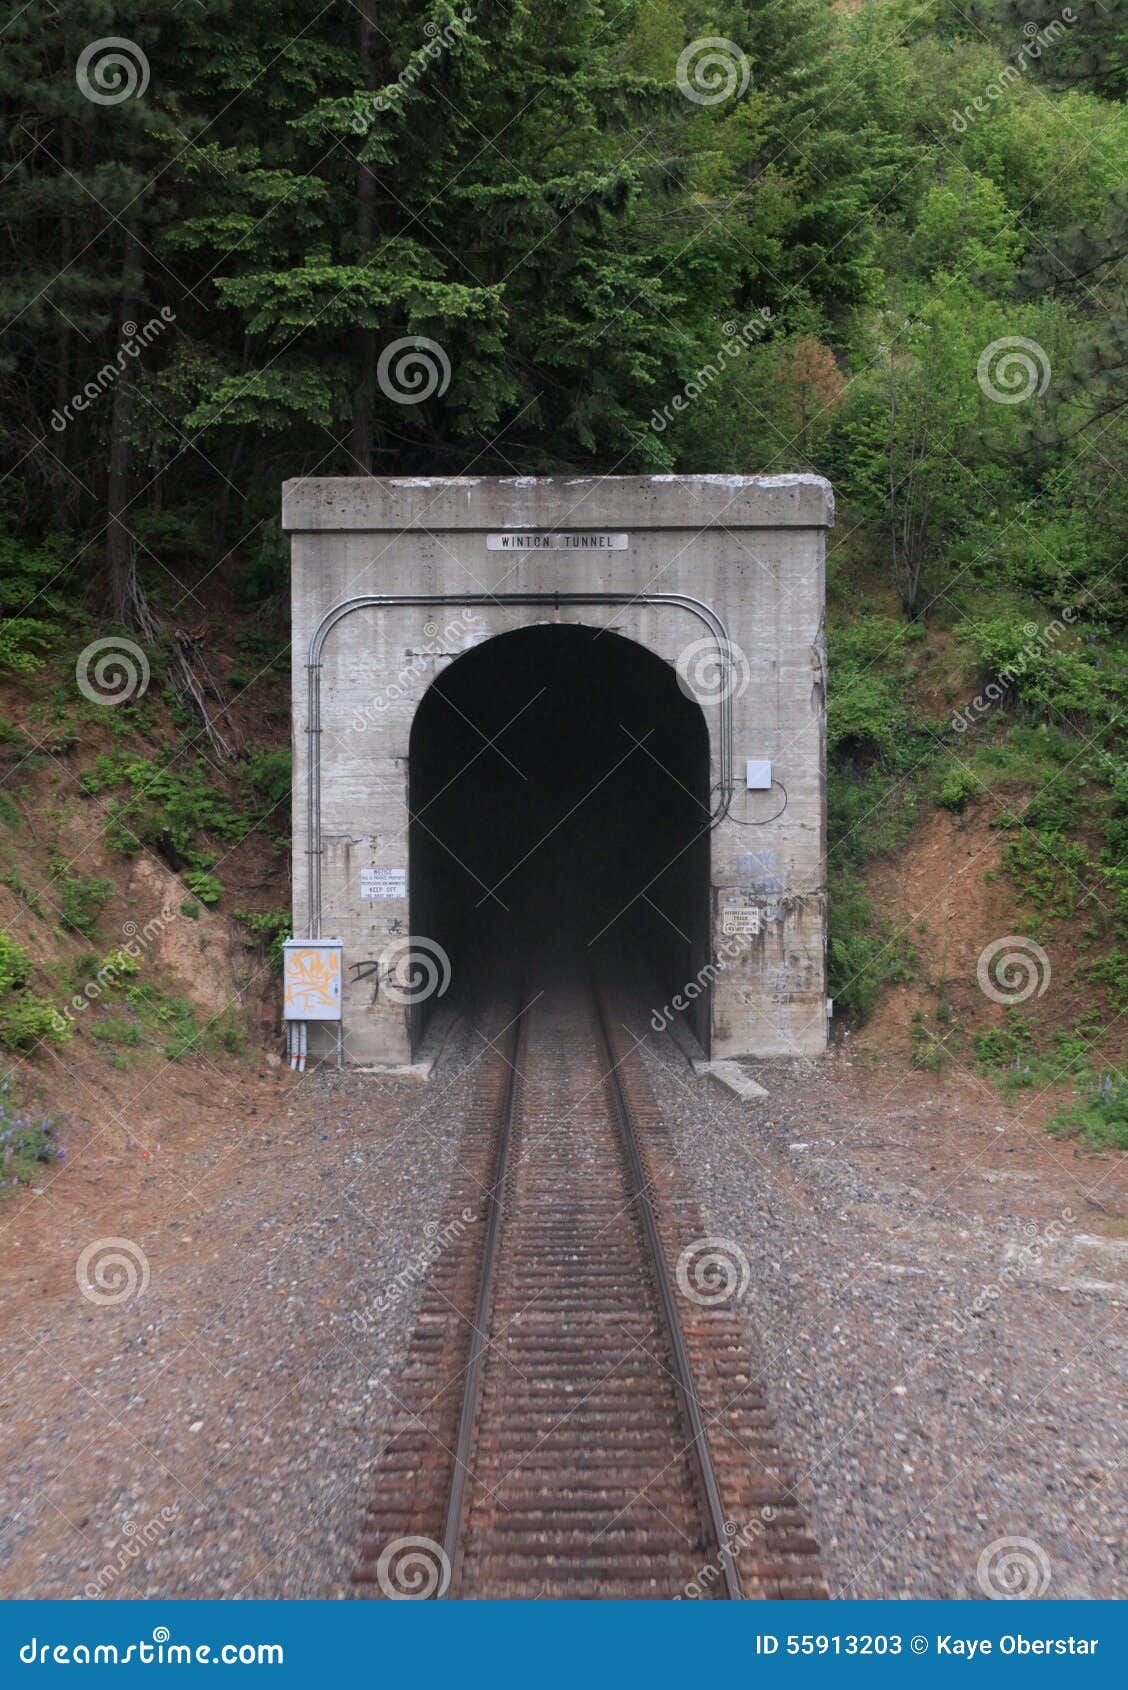 amtrak through the winton tunnel in montana